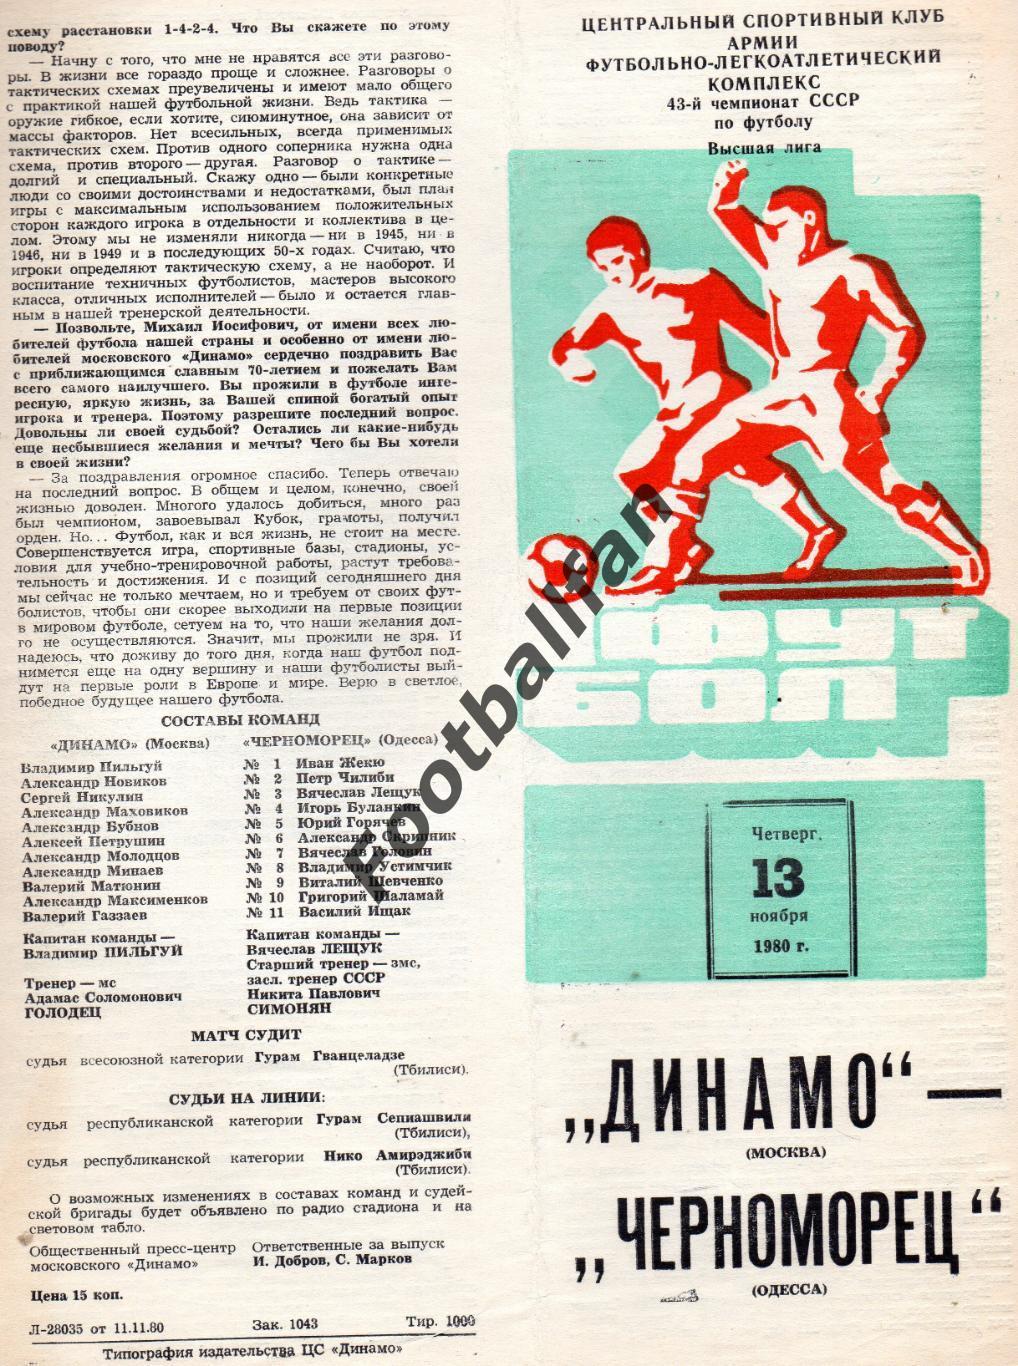 Динамо Москва - Черноморец Одесса 13.11.1980